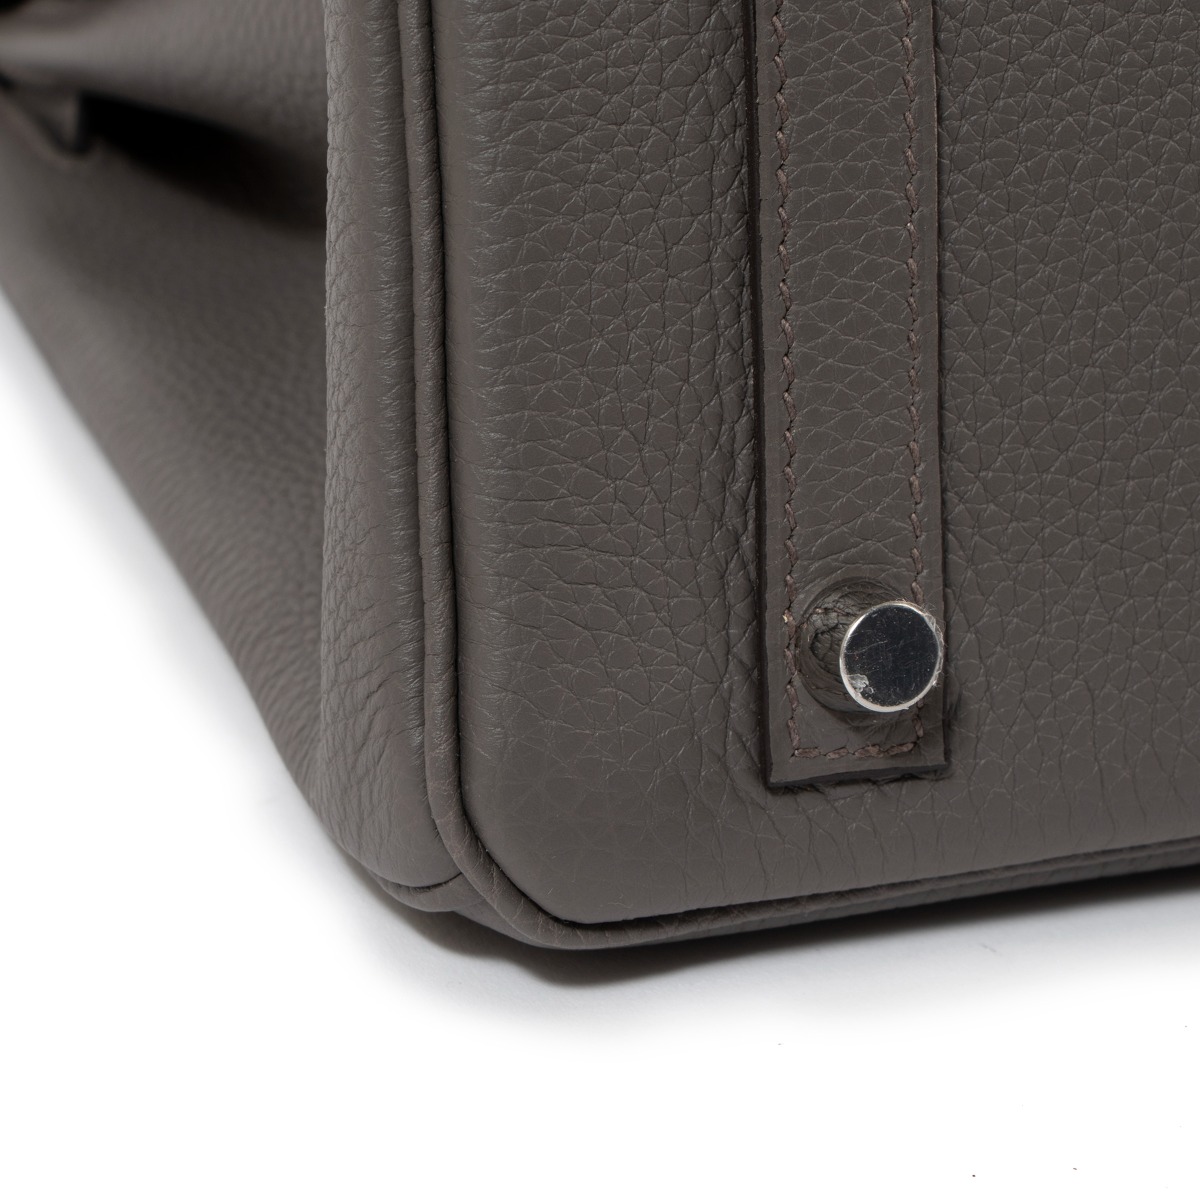 Hermès Birkin Vert Gris Togo 25 Palladium Hardware, 2022 (Like New), Green/Grey/Silver Womens Handbag